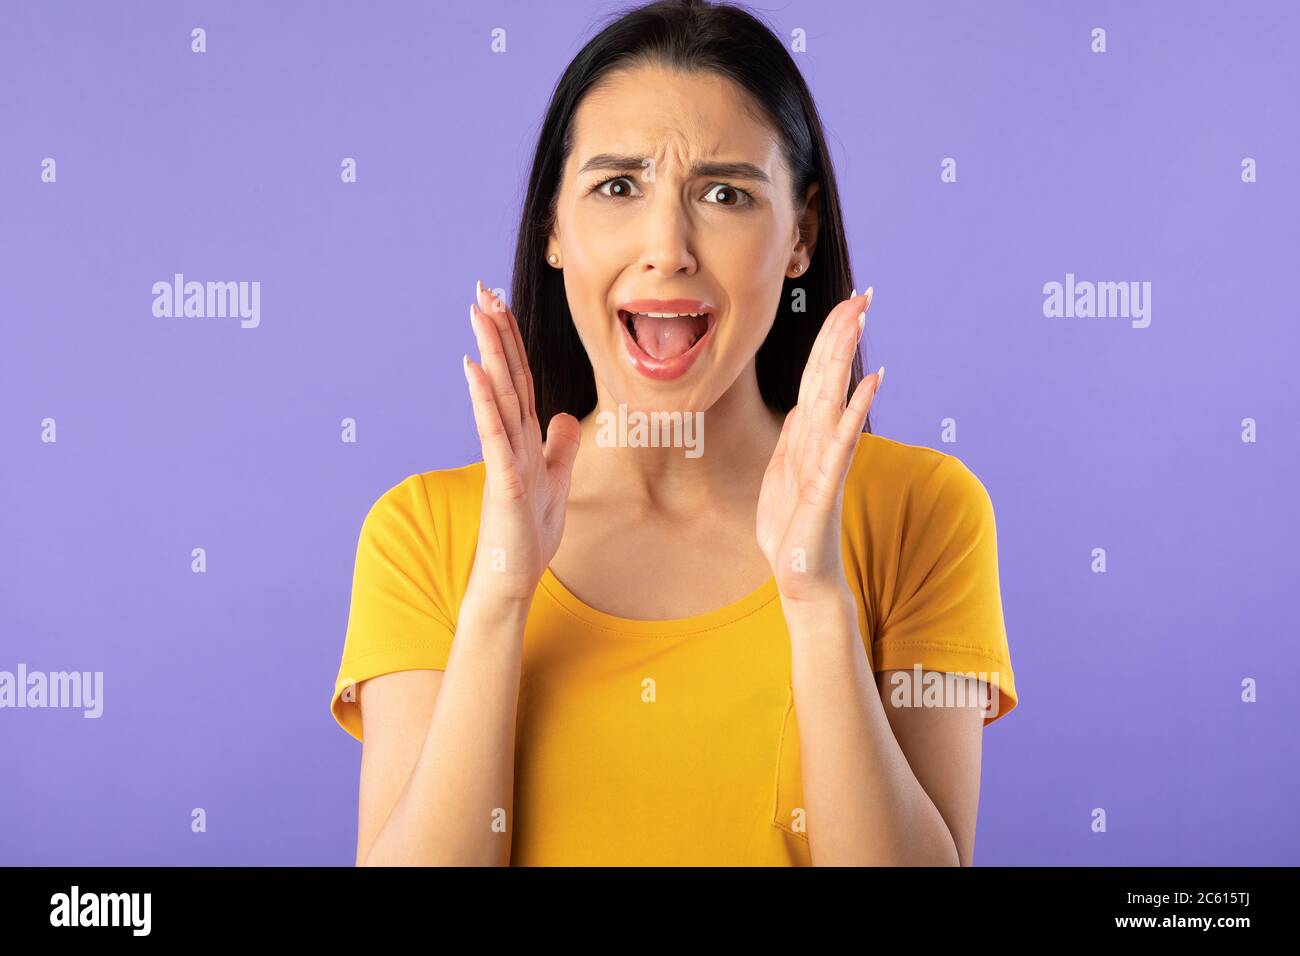 Giovane donna grimacing, urlando allo studio viola Foto Stock